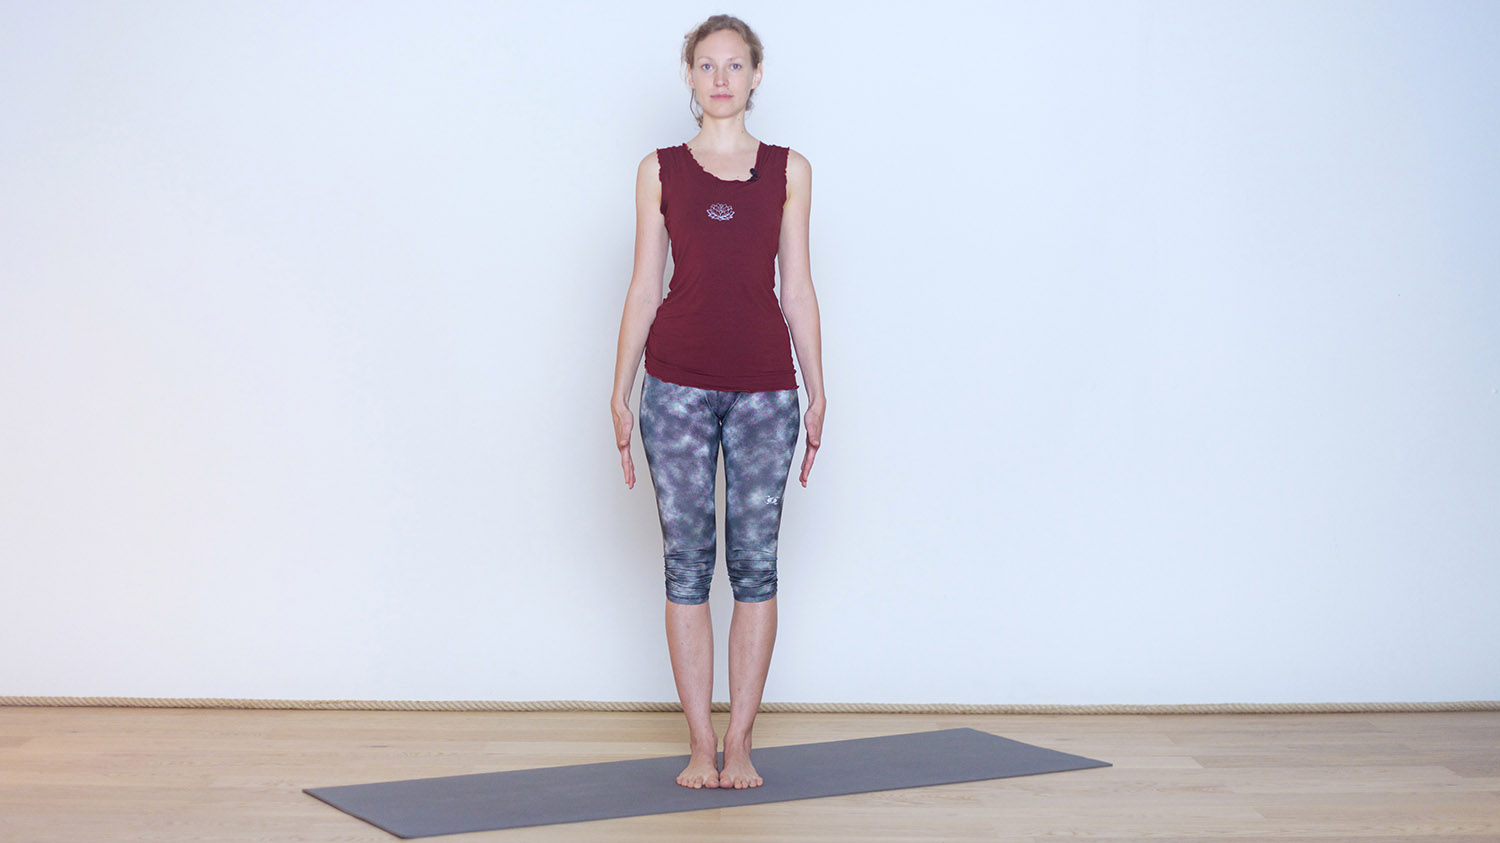 Tadasana selon Anastasia | Cours de yoga en ligne avec Anastasia Tikhonova | Alignement